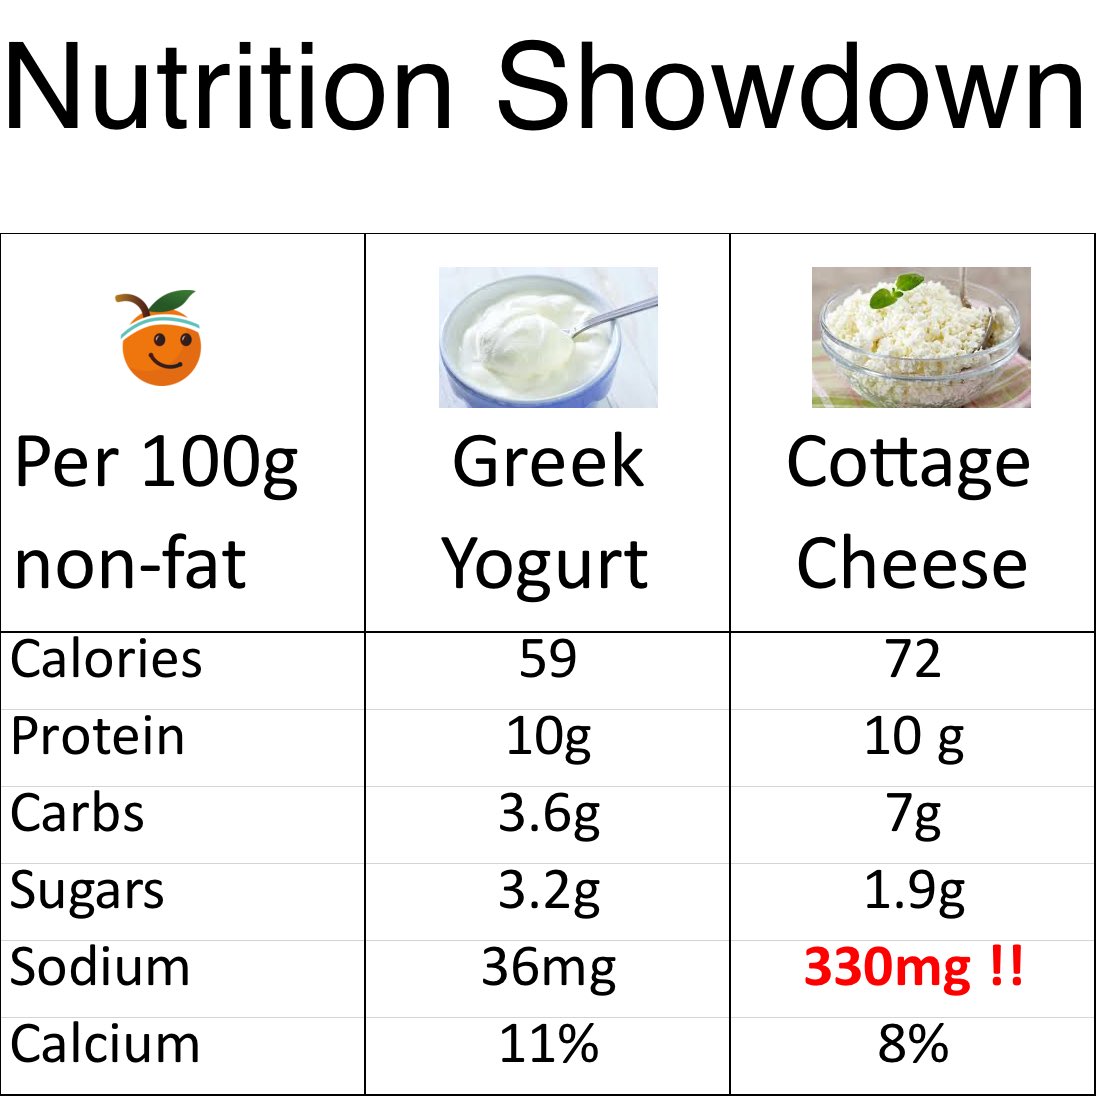 Nutrition Showdown: Greek Yogurt vs. Cottage Cheese